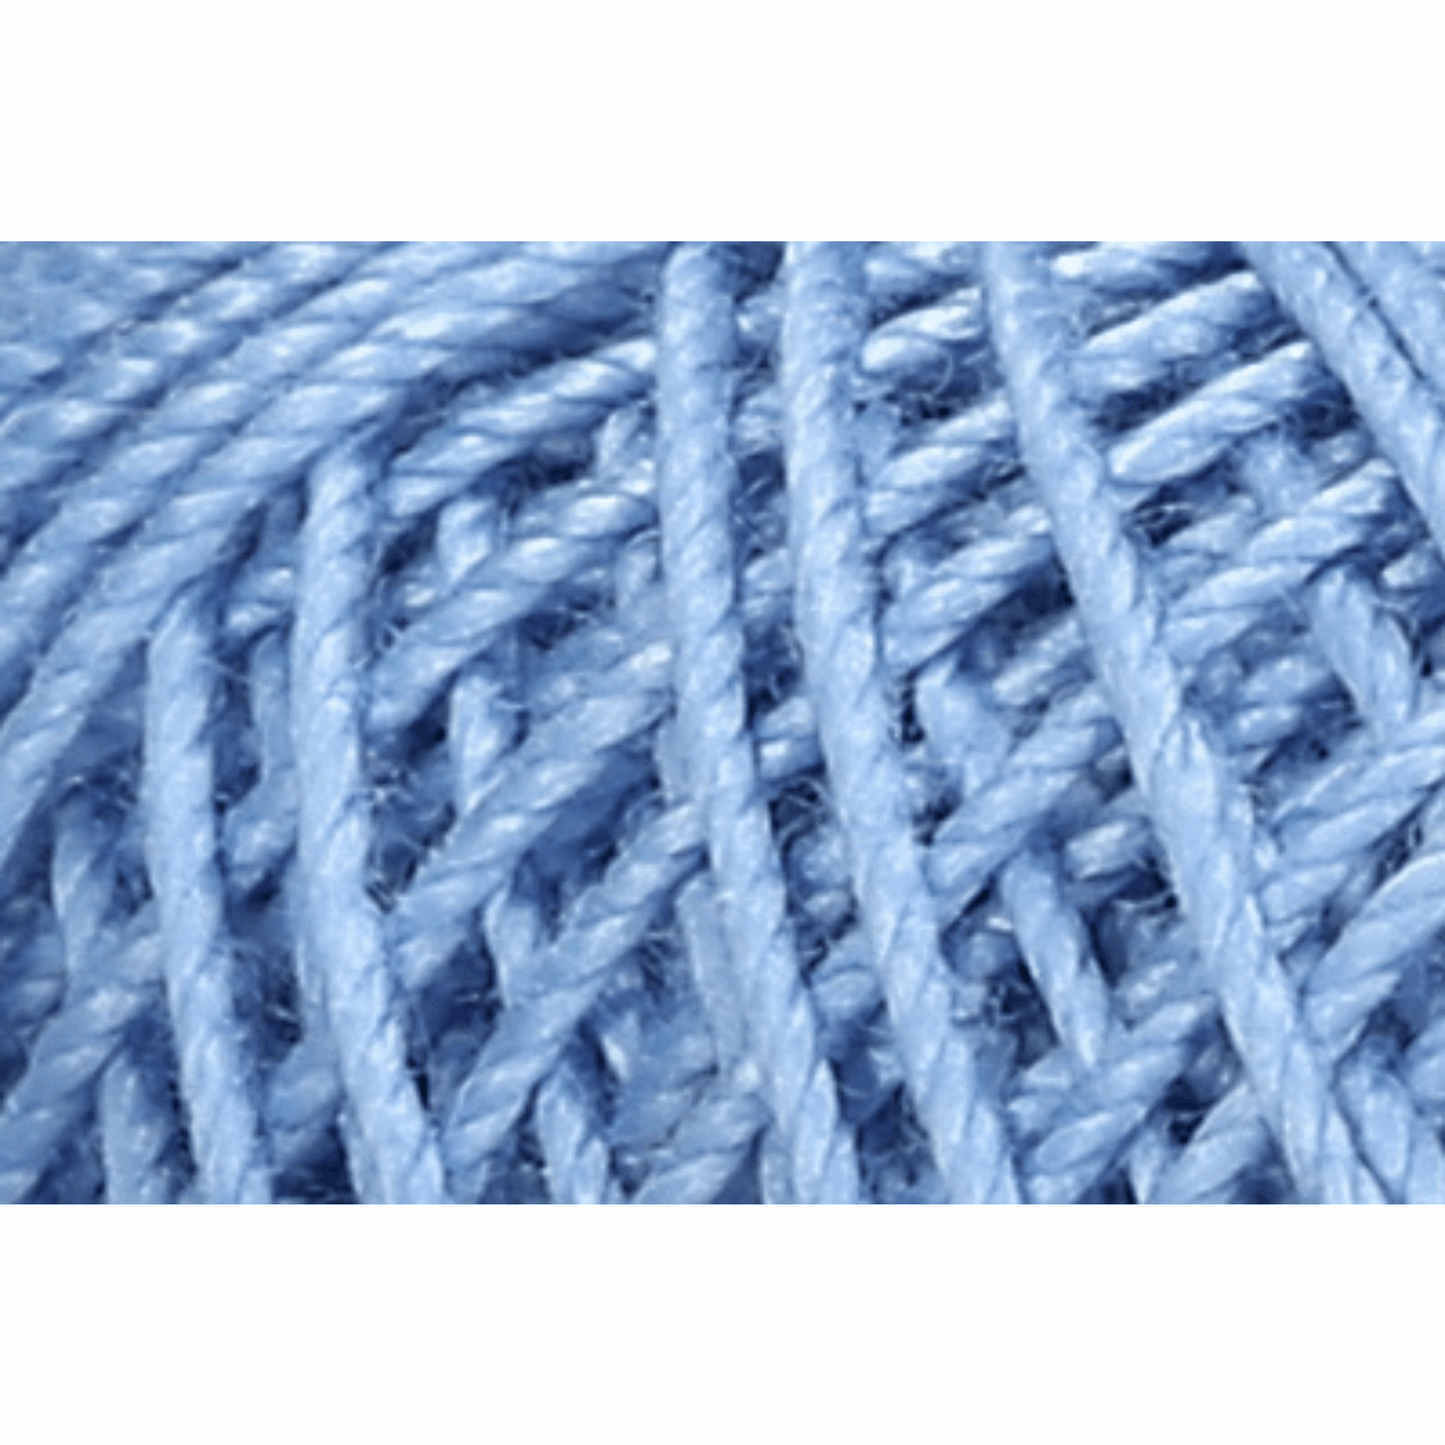 Freccia 6 crochet yarn, 50g, colour 130